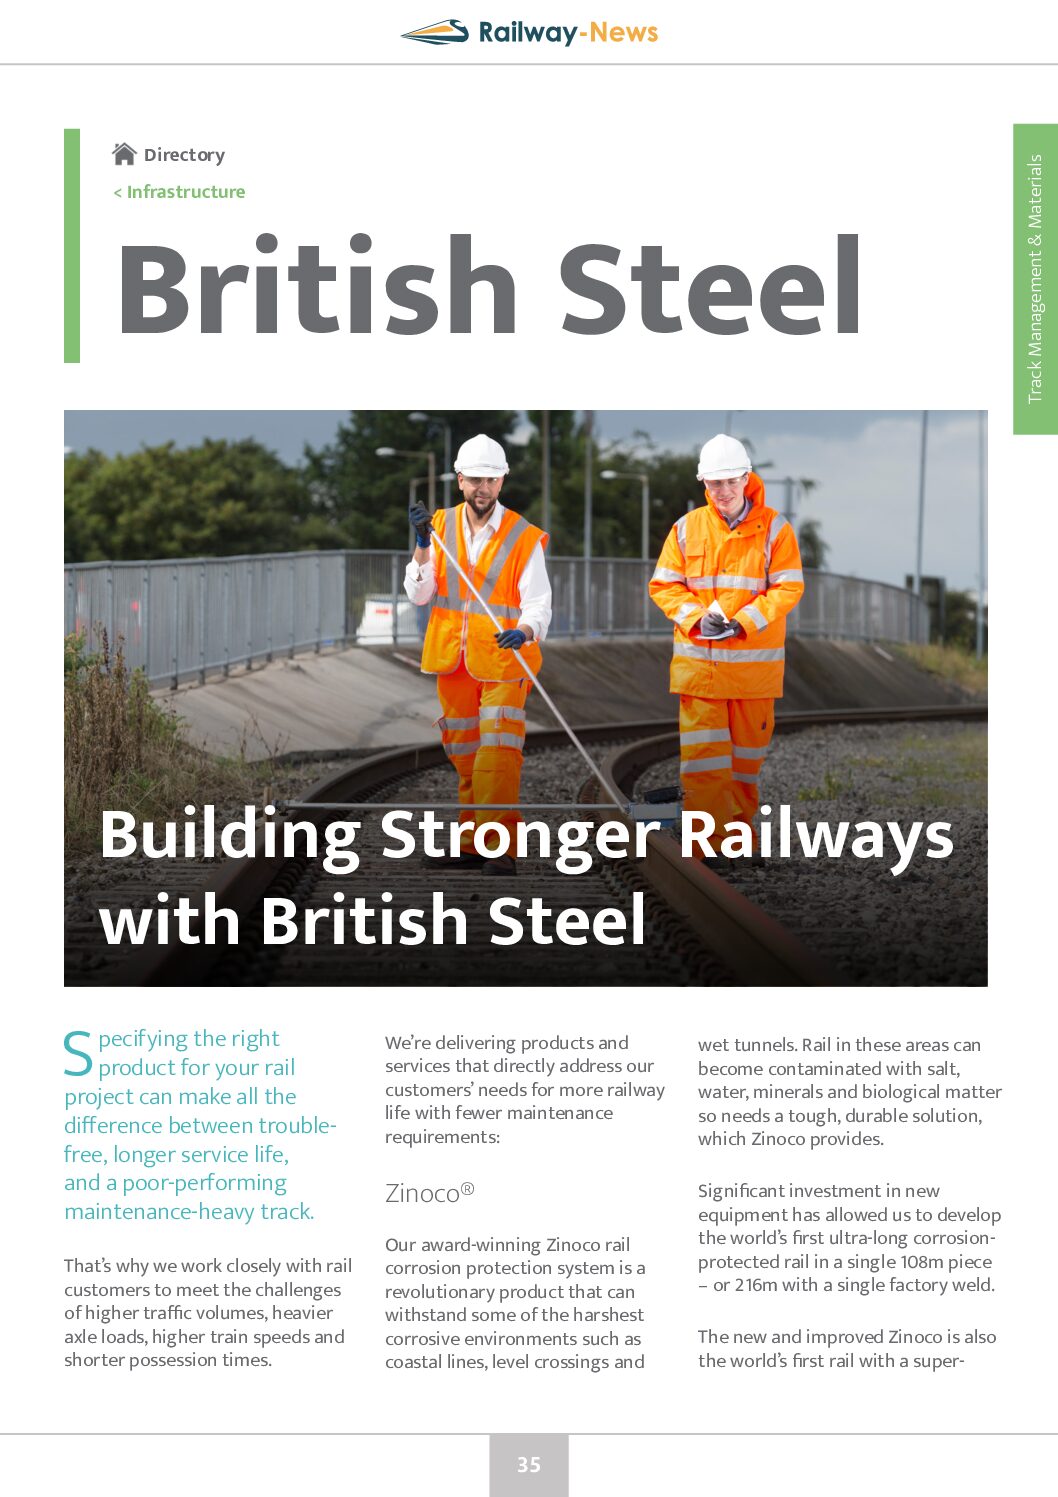 Building Stronger Railways with British Steel